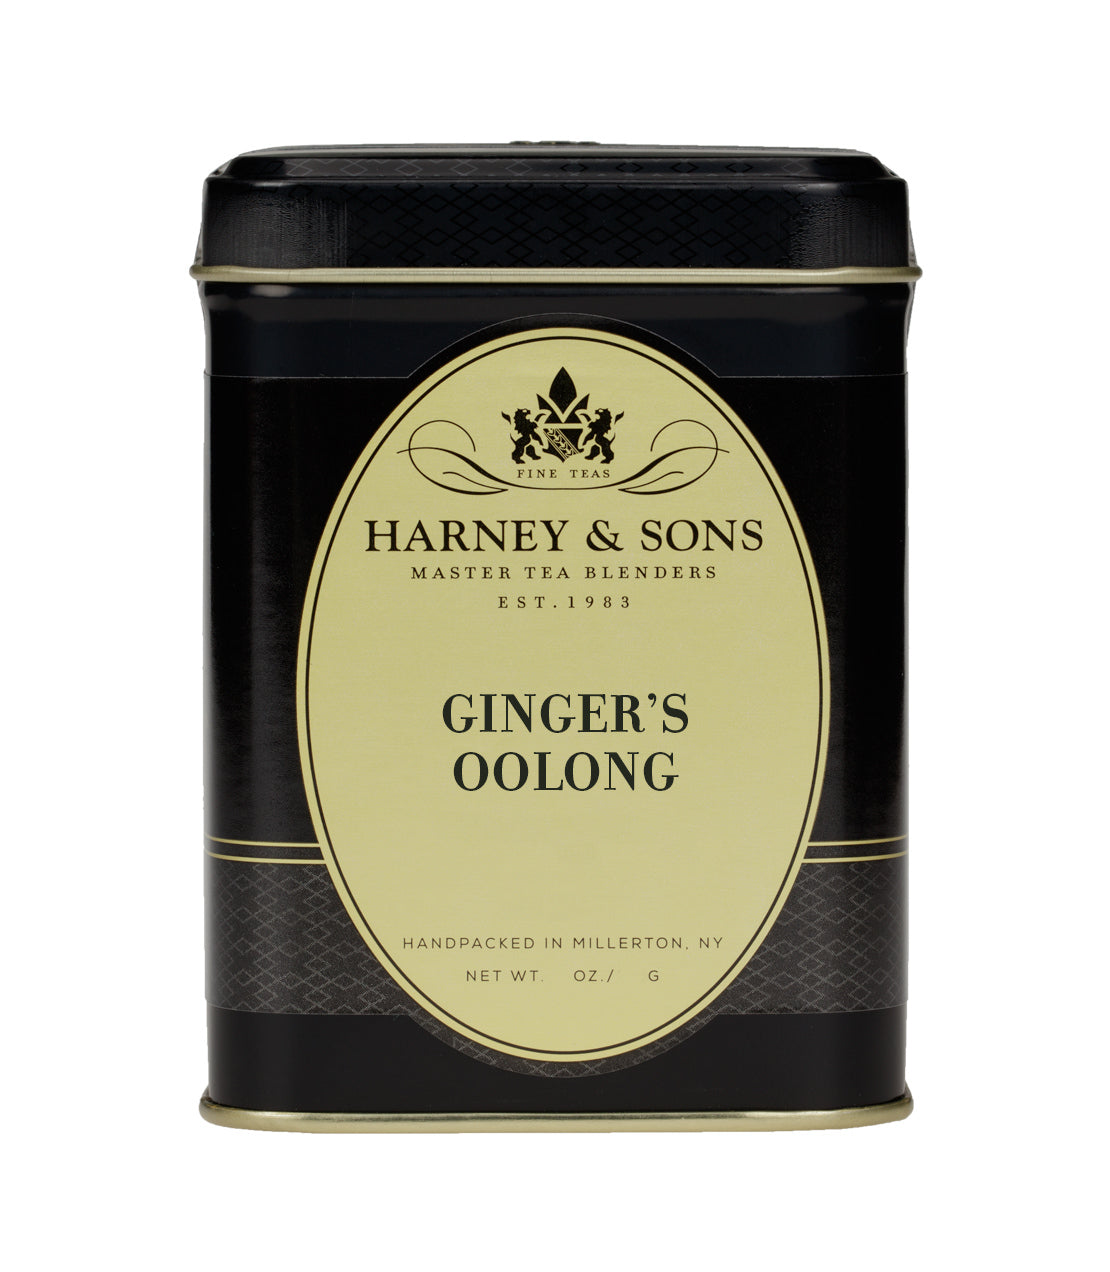 Ginger's Oolong - Loose 3 oz. Tin - Harney & Sons Fine Teas